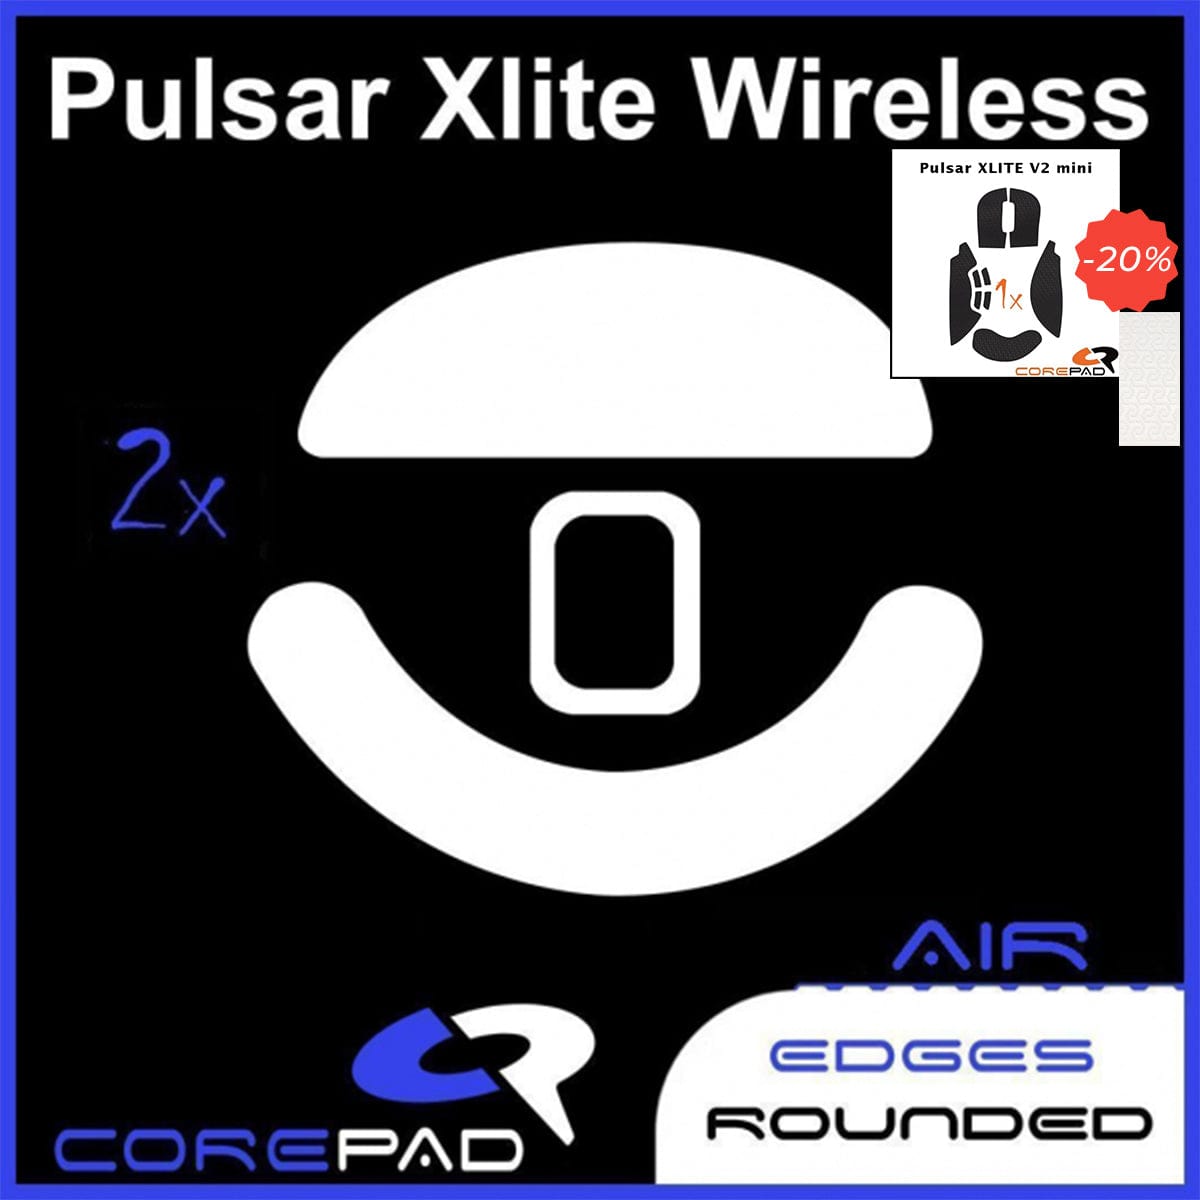 Bundle Feet + Grip tape Corepad - Pulsar Xlite V2 Mini